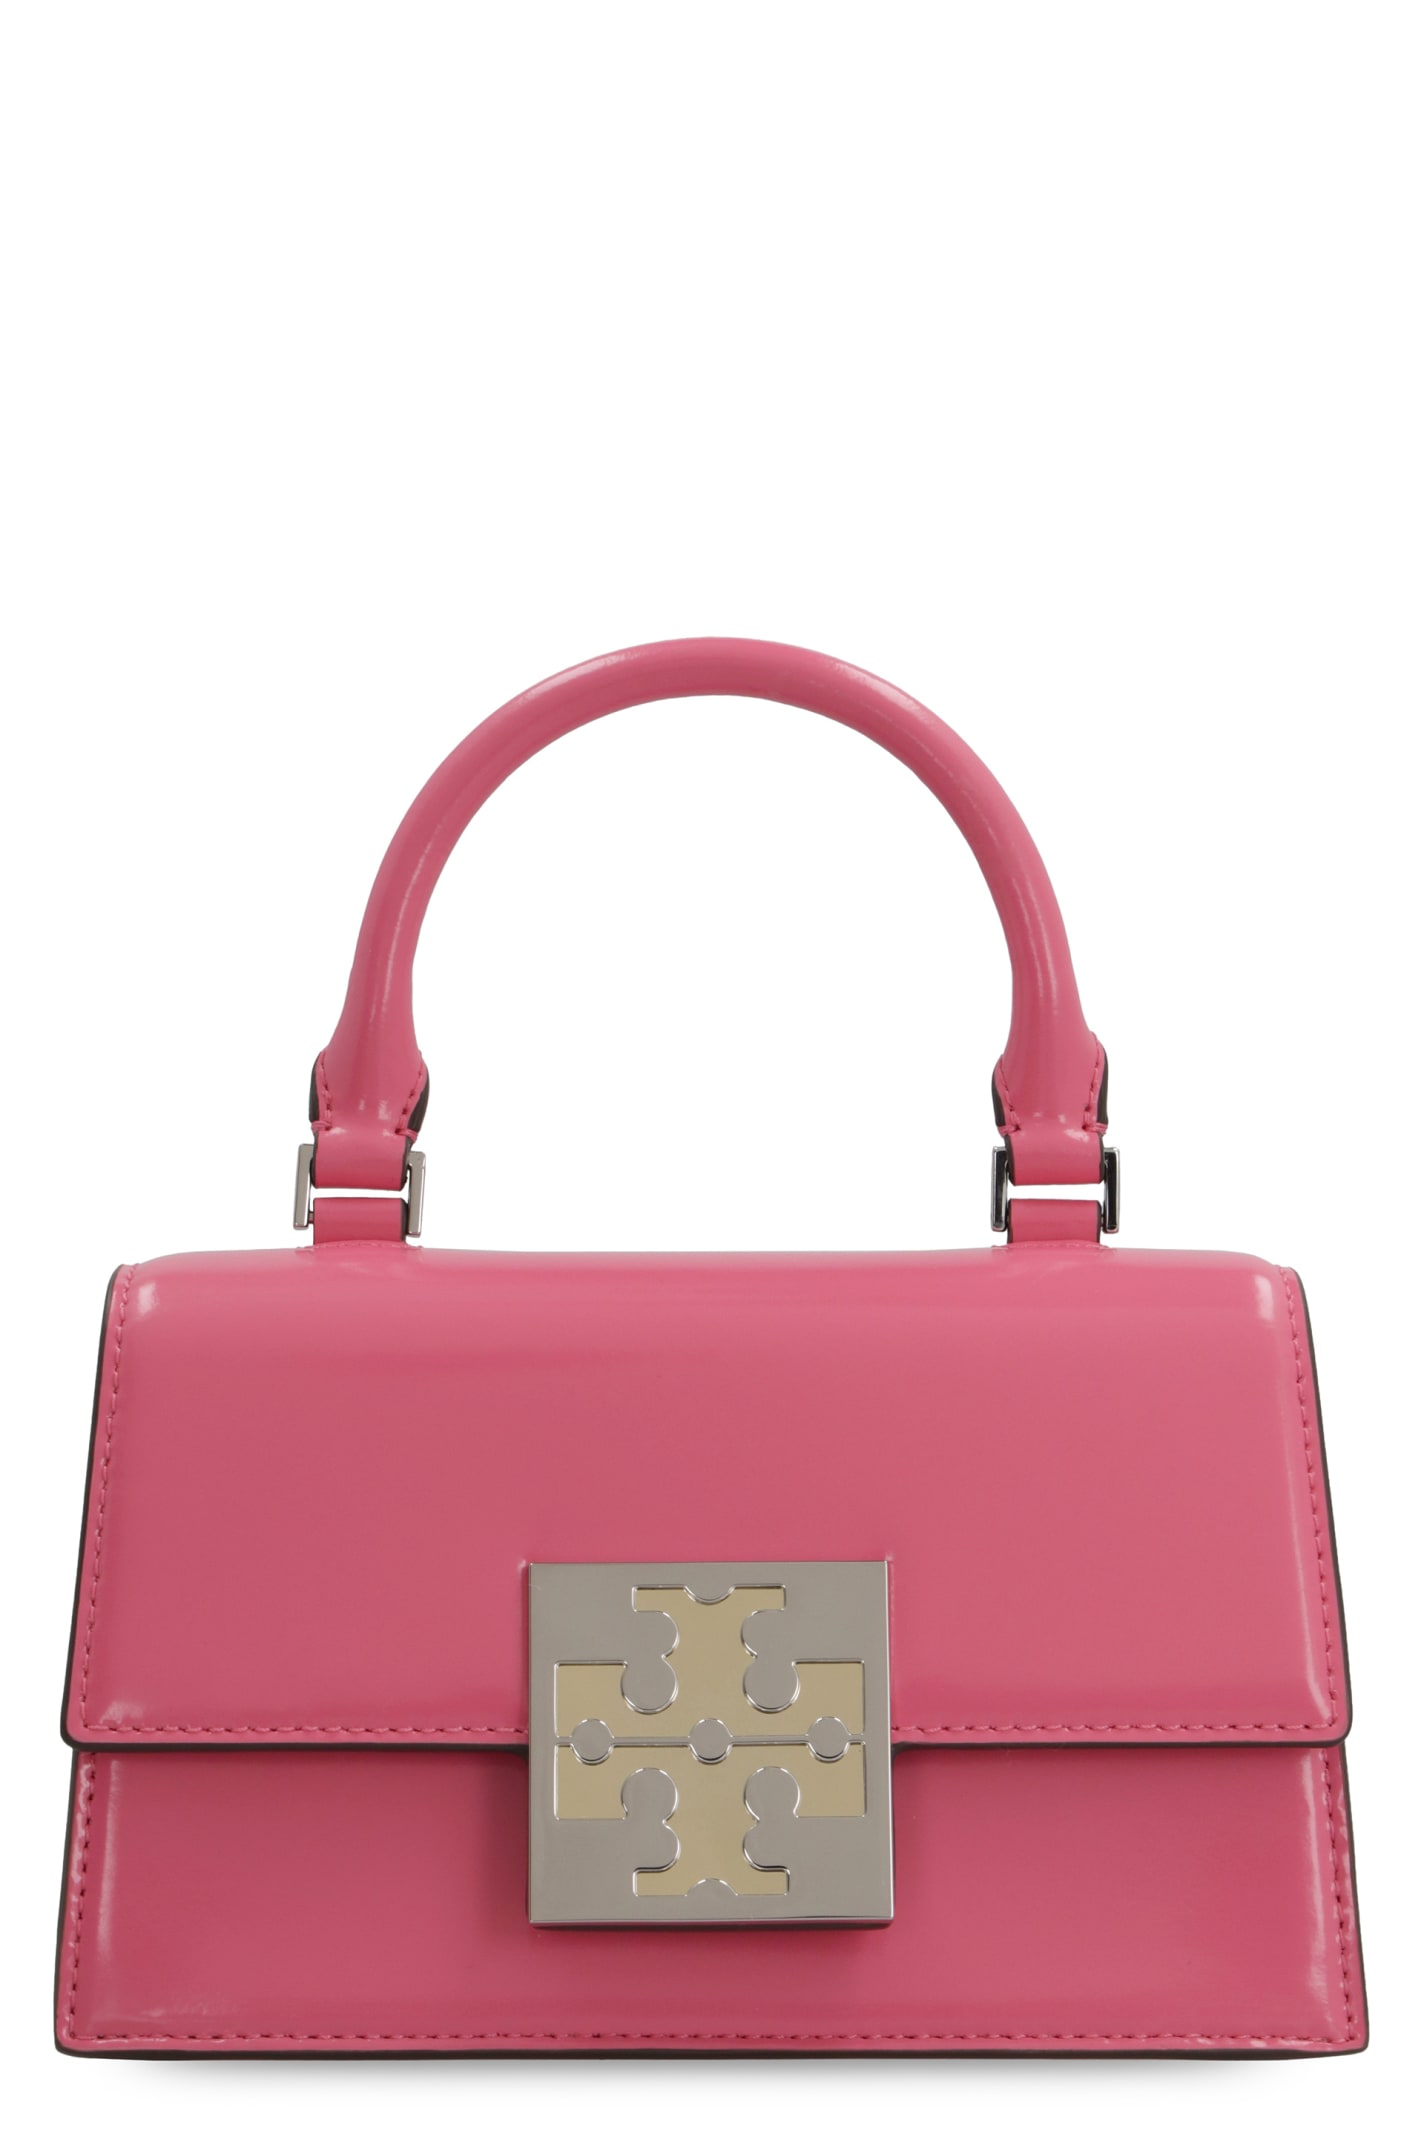 Tory Burch Leather Mini Handbag In Pink